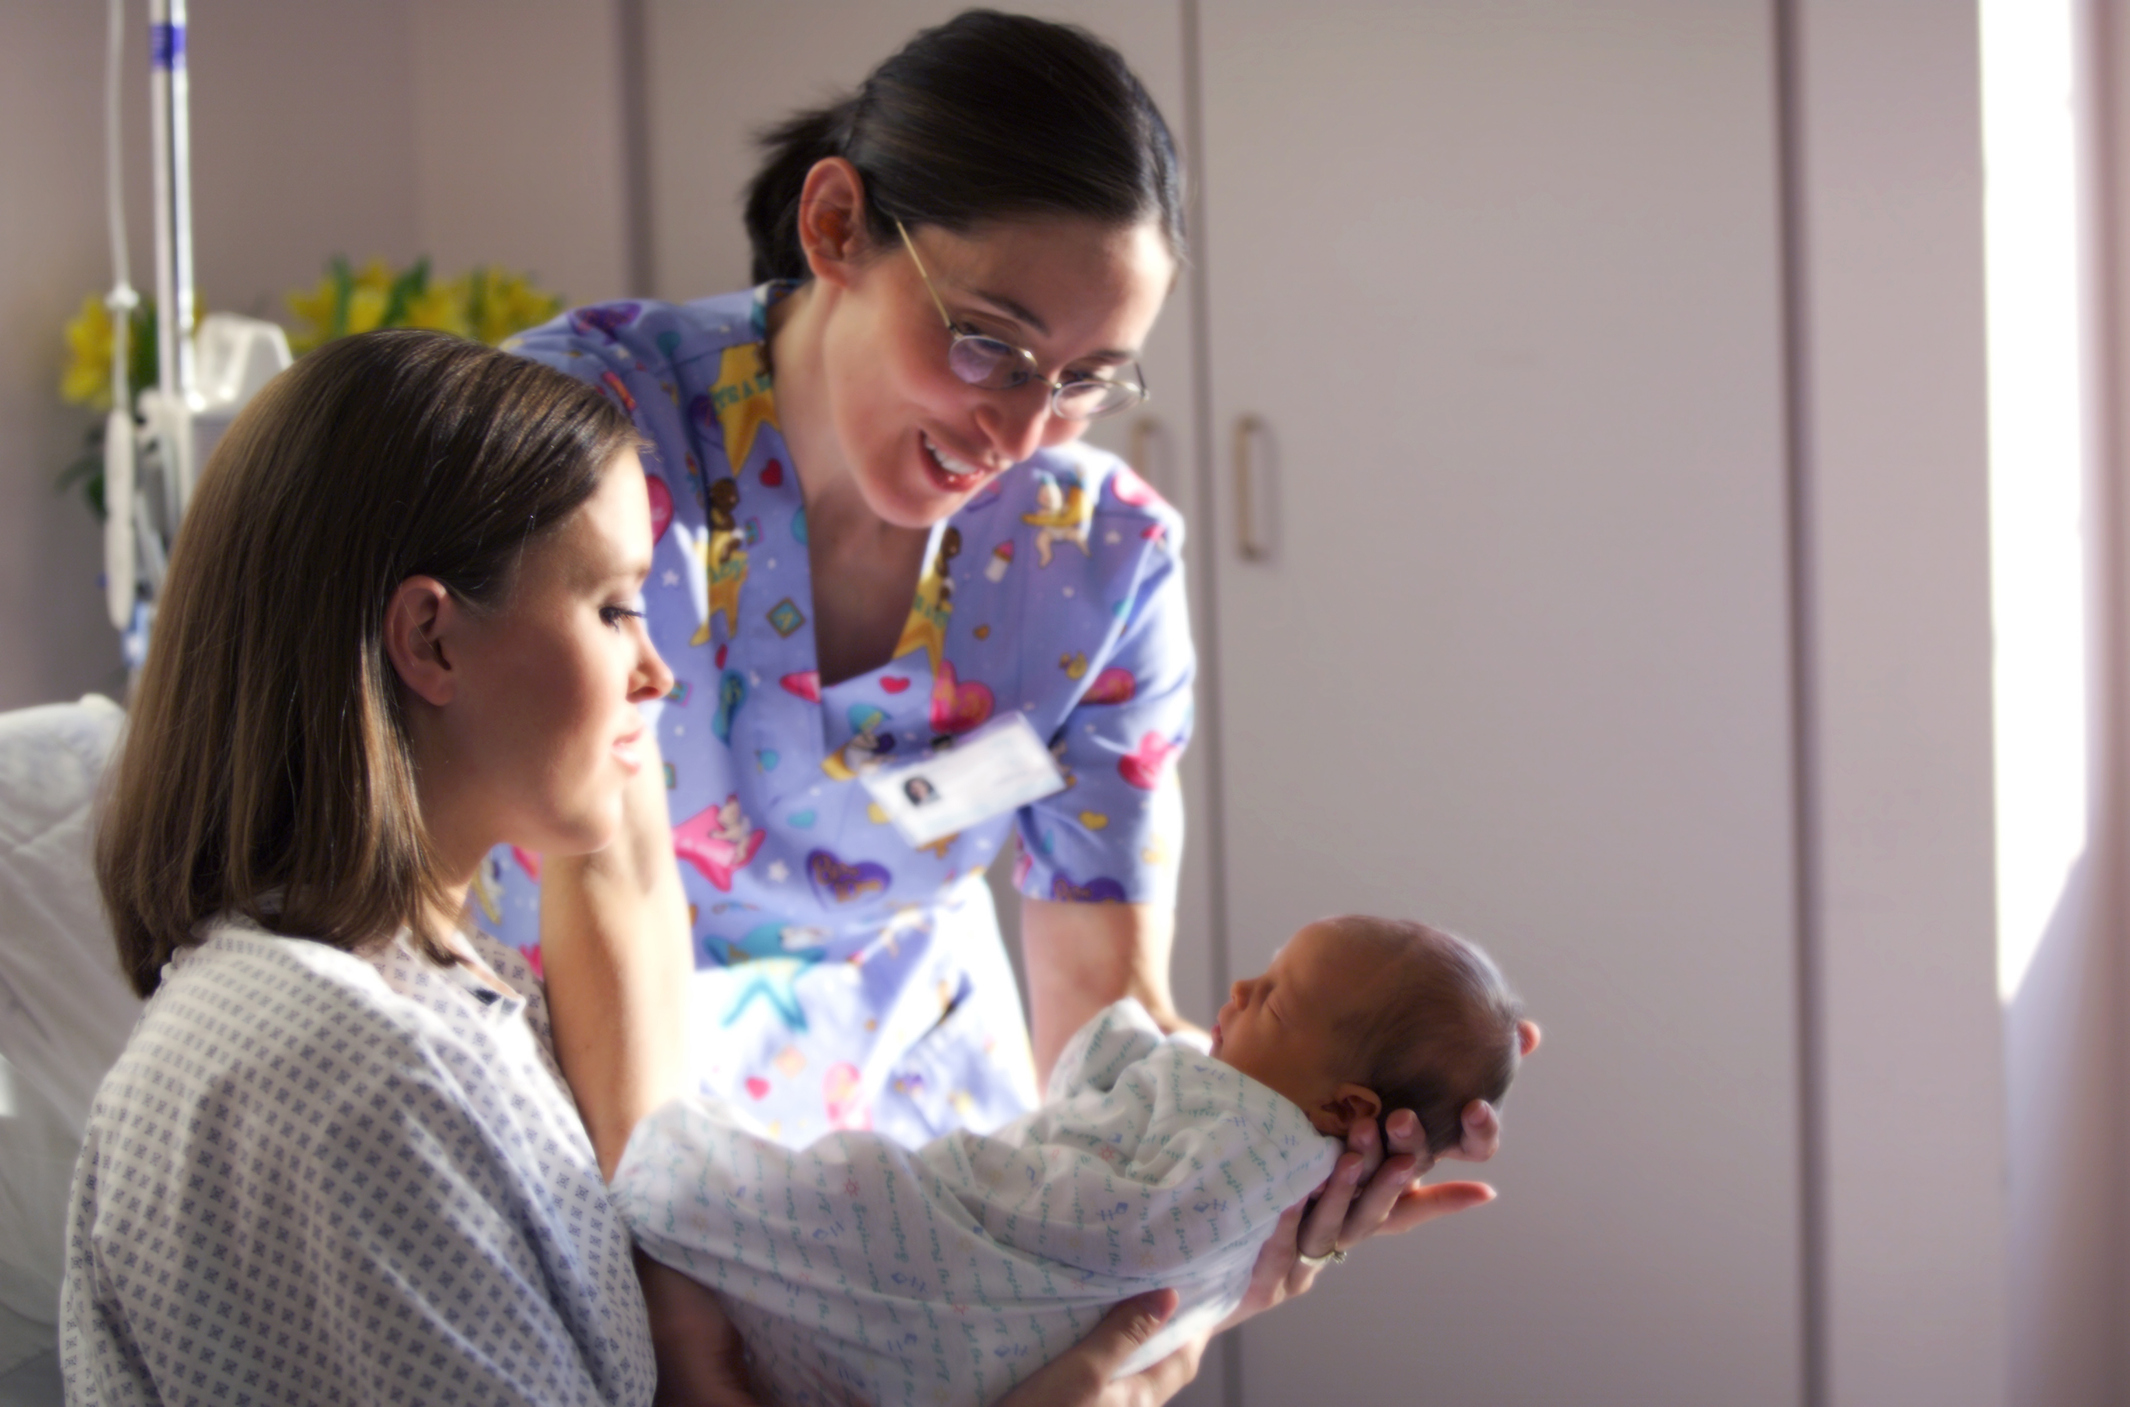 Get Started as a Postpartum Travel Nurse